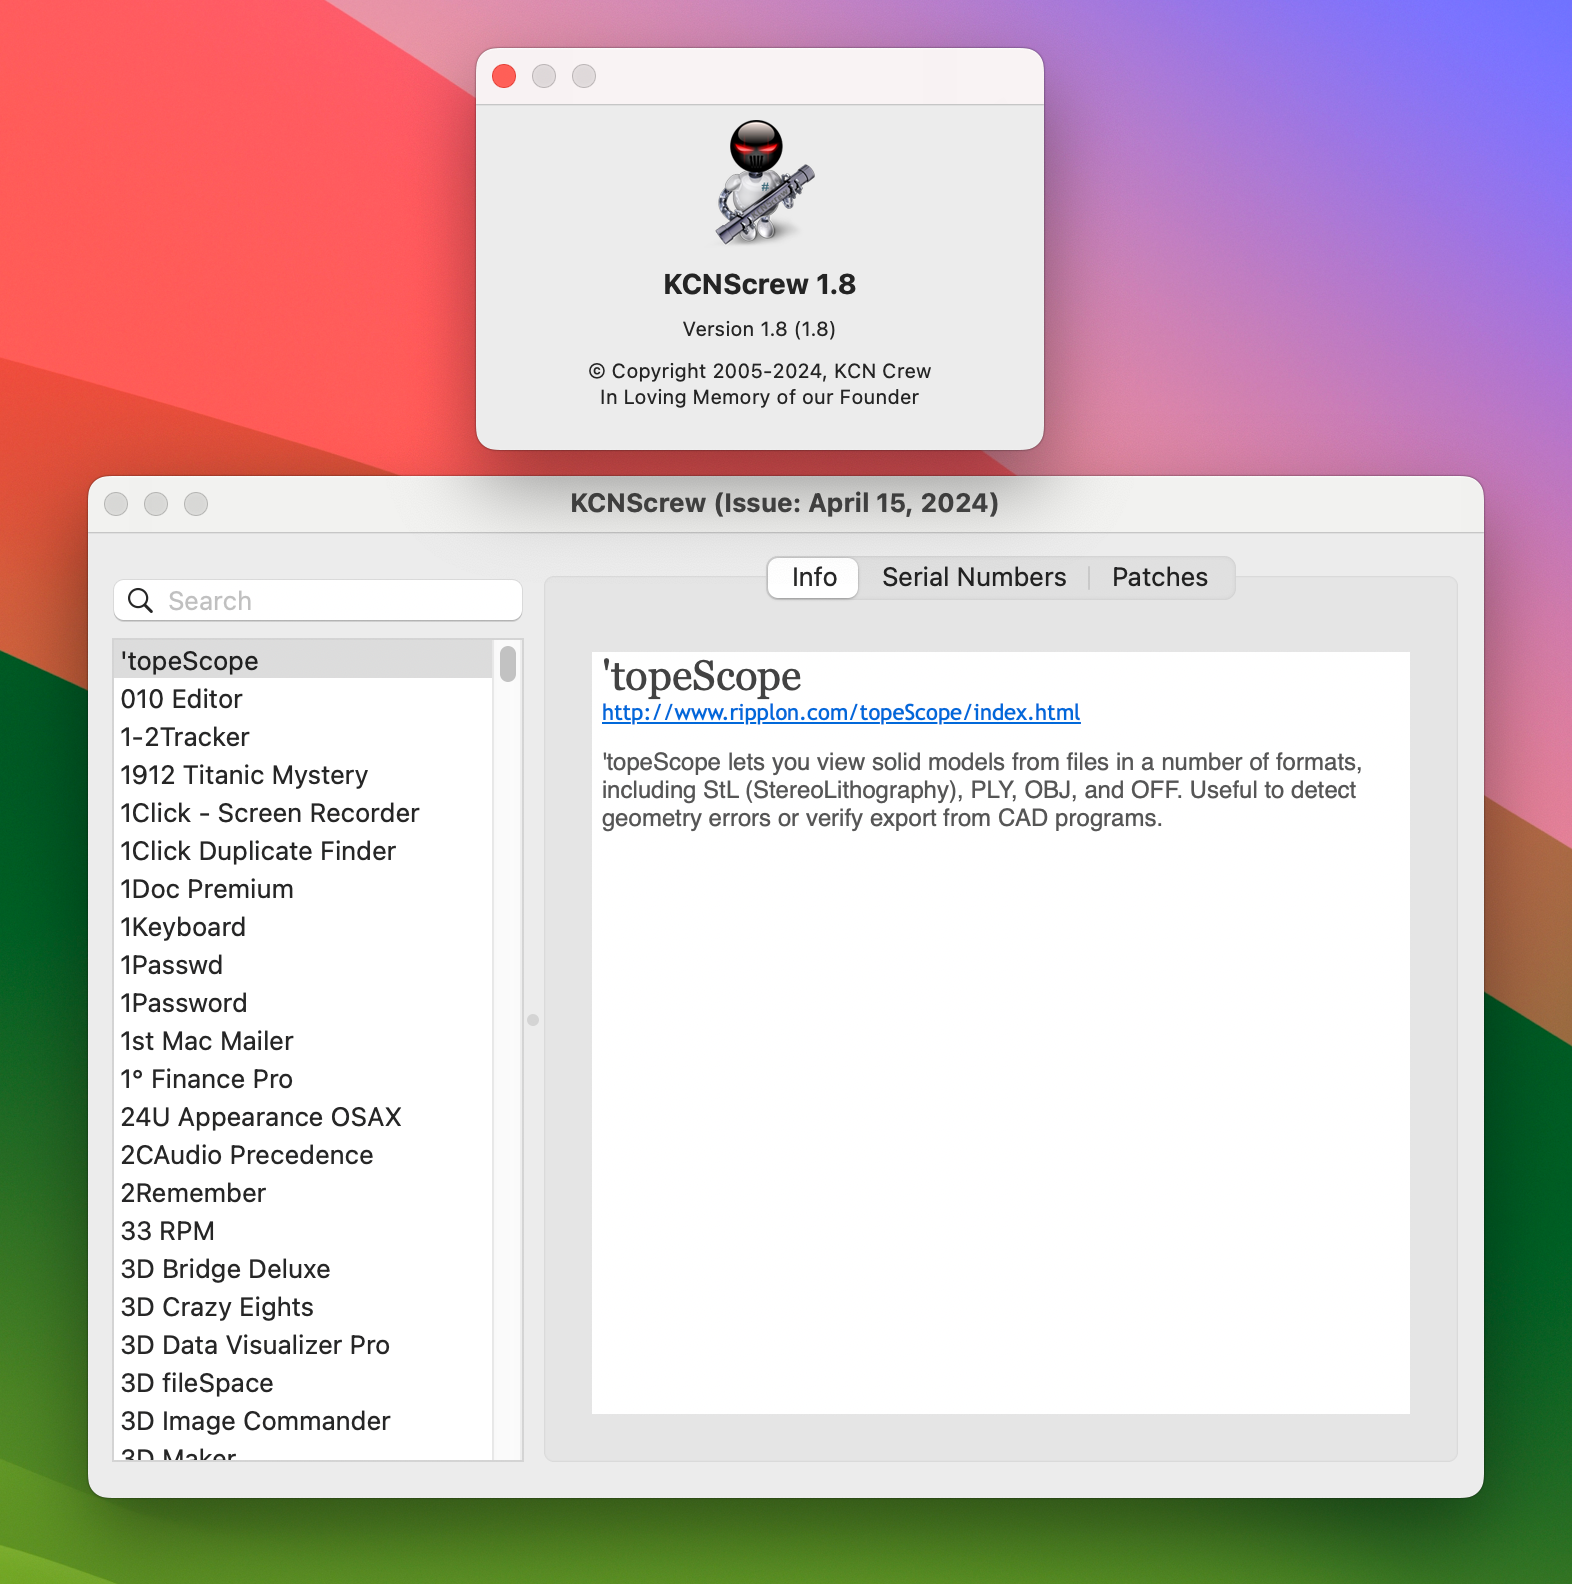 KCNcrew Pack for Mac v1.8 (04-15-2024) 软件序列号查询工具 免激活下载-1